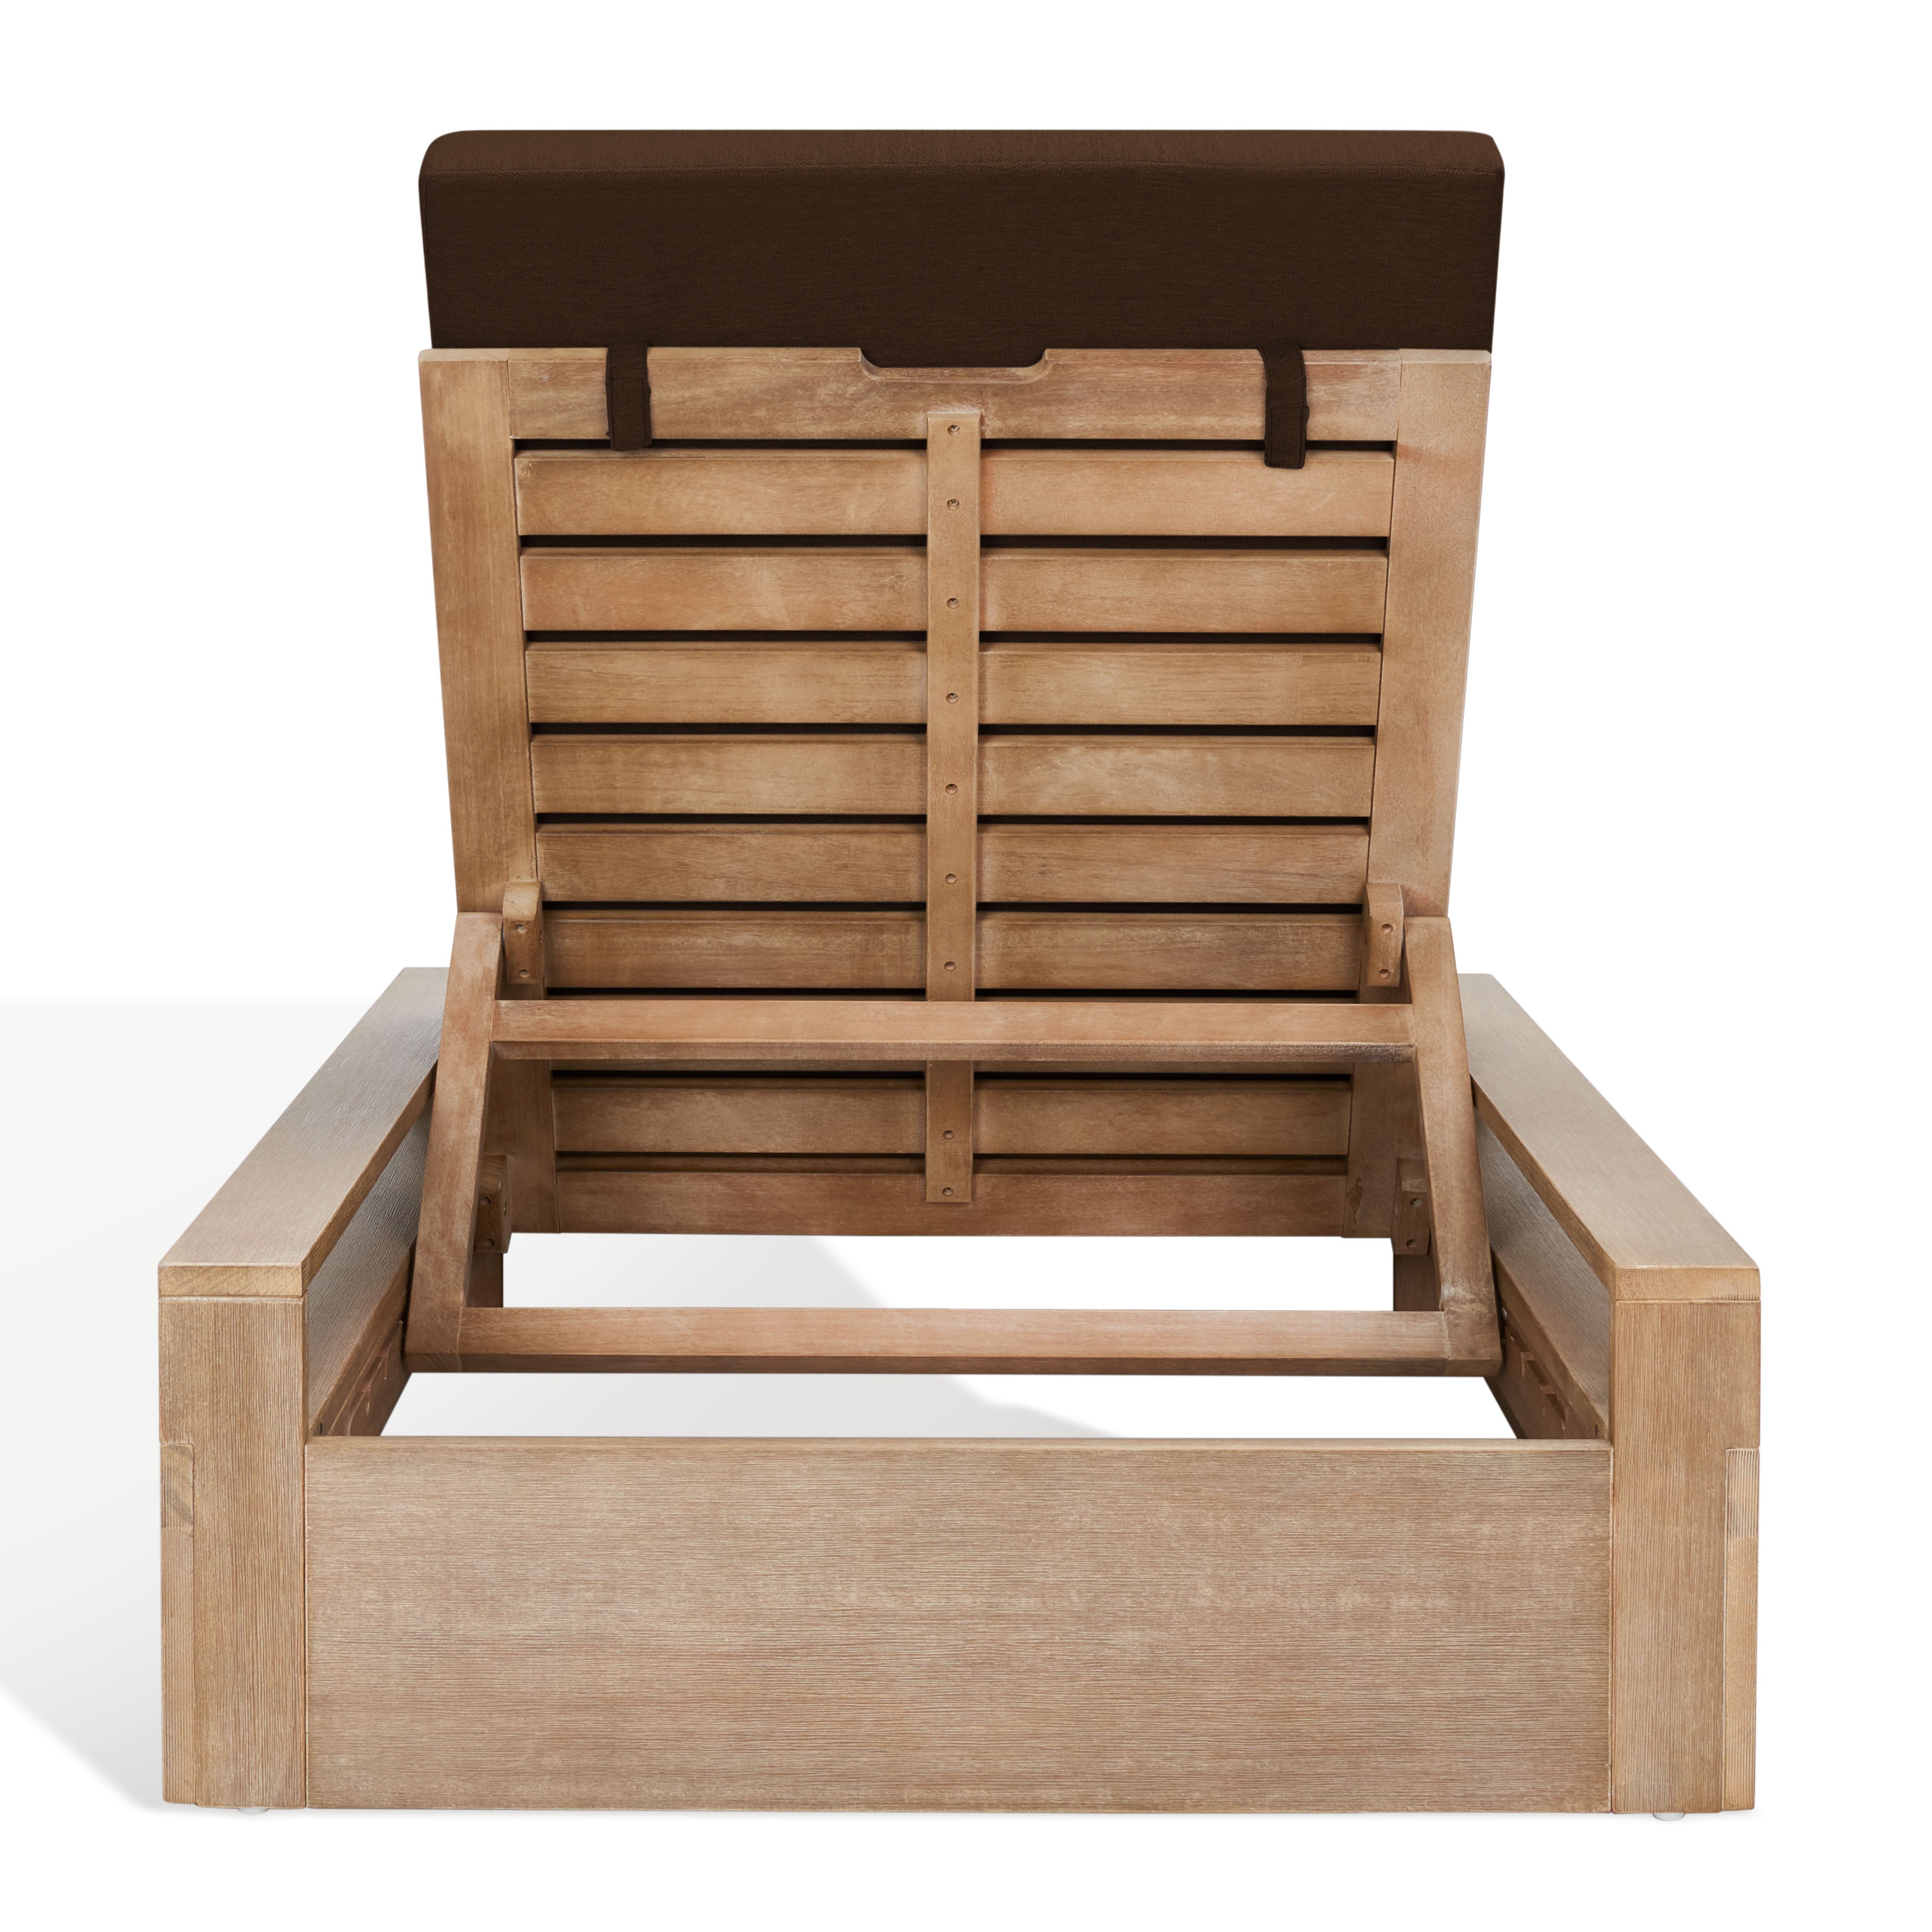 Safavieh Couture Lanai Wood Chaise Lounge Chair, CPT1039 - Natural / Dark Brown